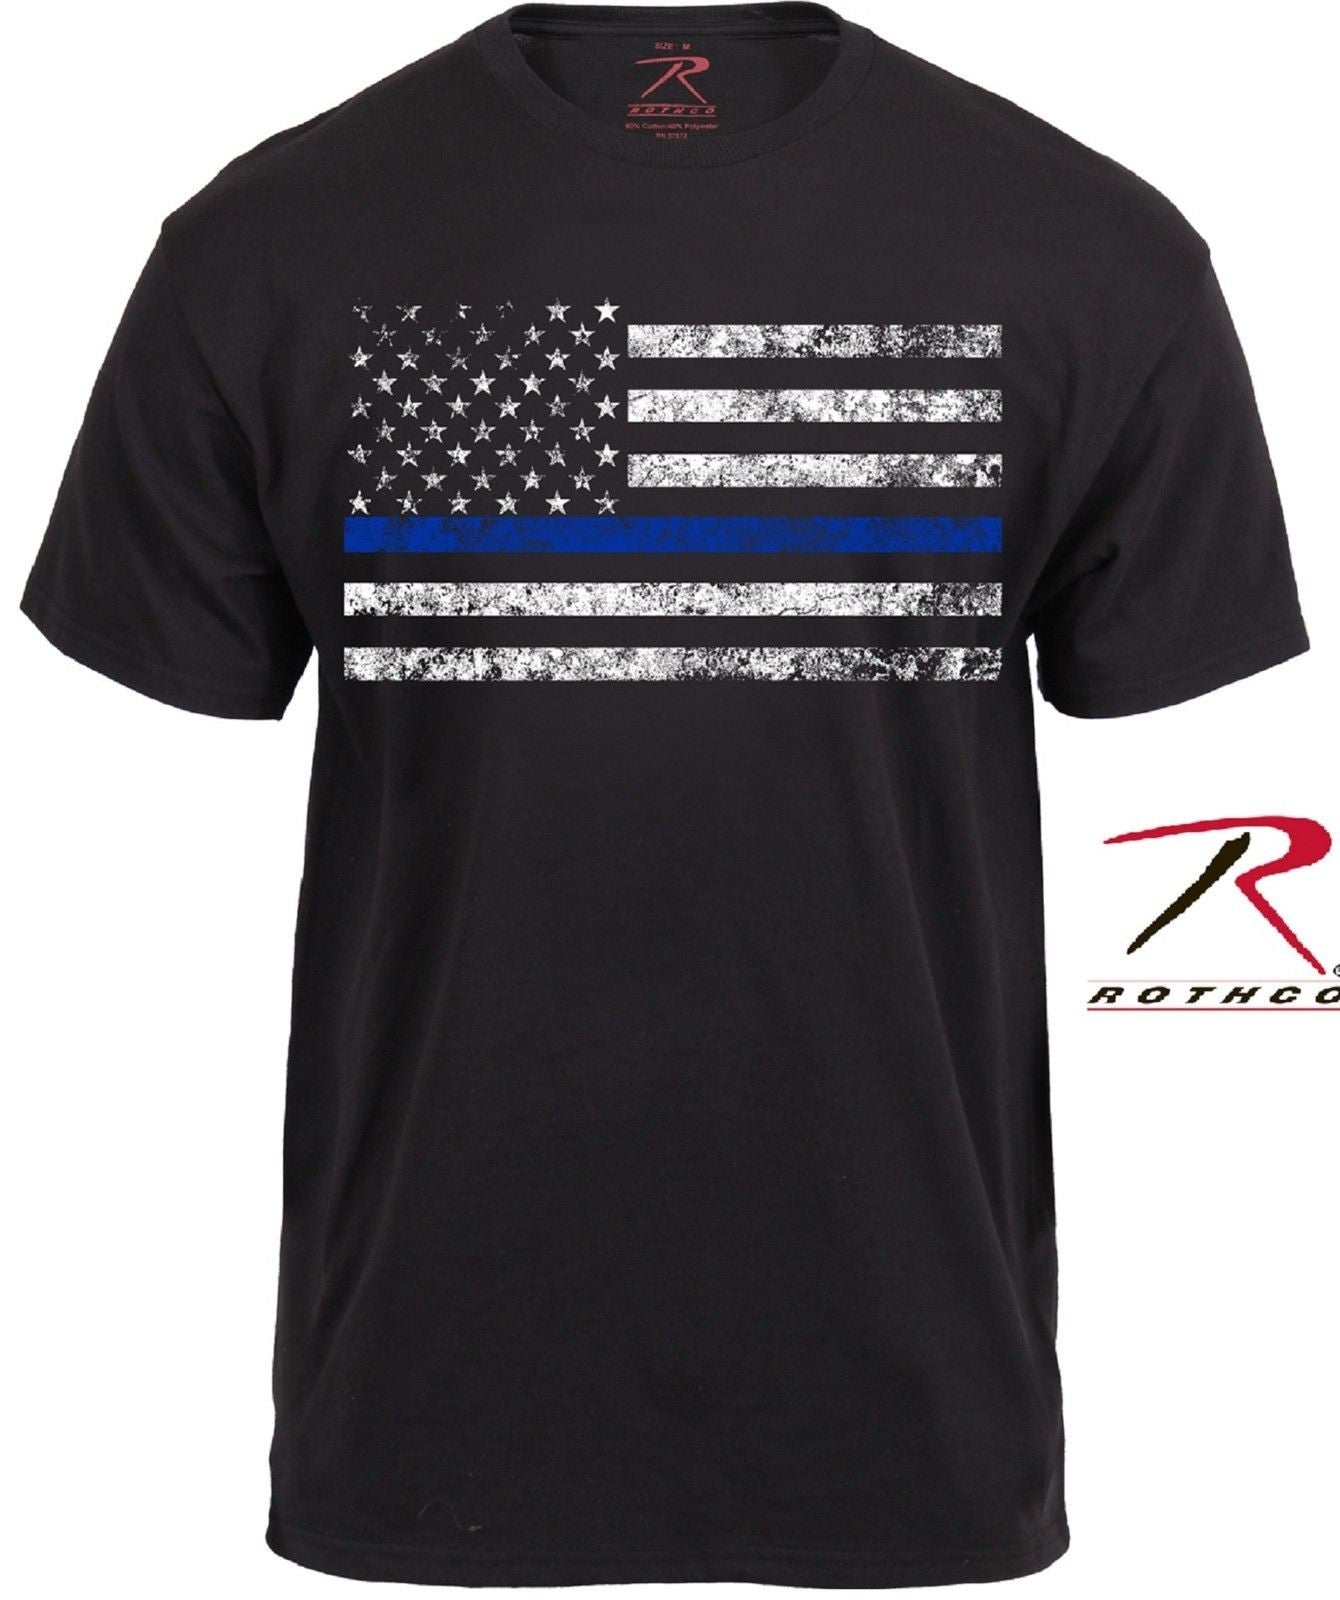 Mens Thin Blue Line Police Support Tee Shirt - Rothco Silver & Black TBL T-Shirt